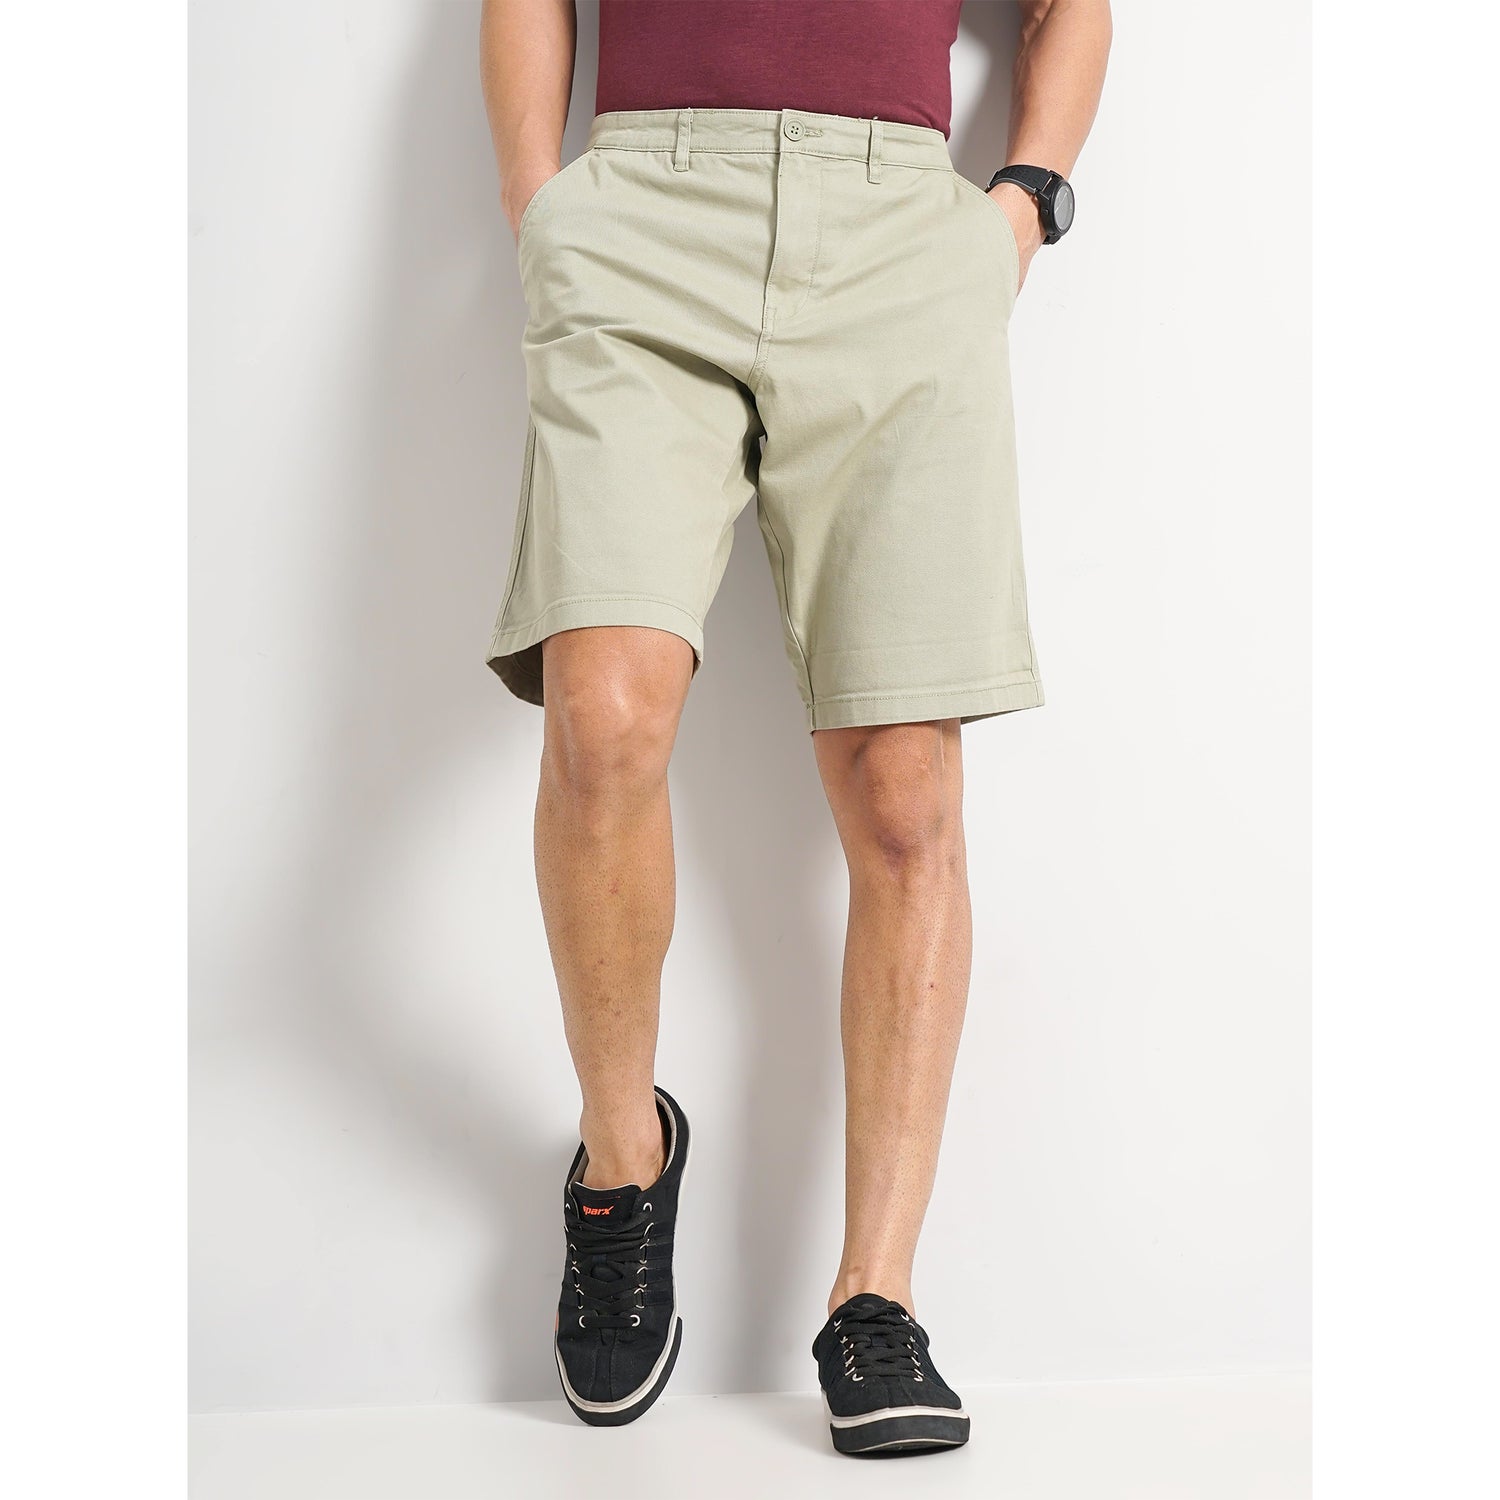 Men's Green Solid Regular Fit Cotton Chino Casual Shorts (BOCHINOBM2)